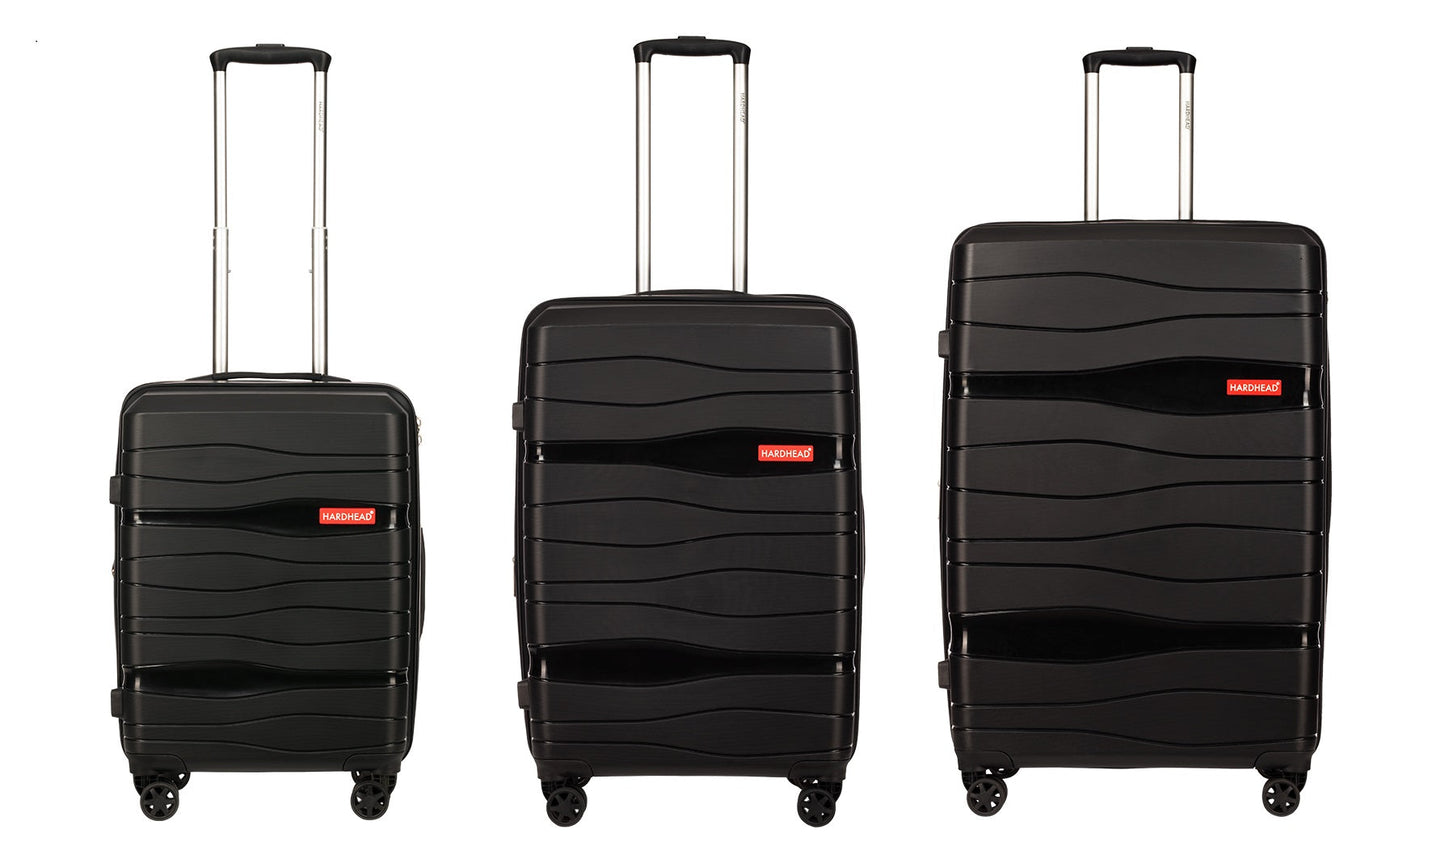 Albert Black 3 pieces luggage set